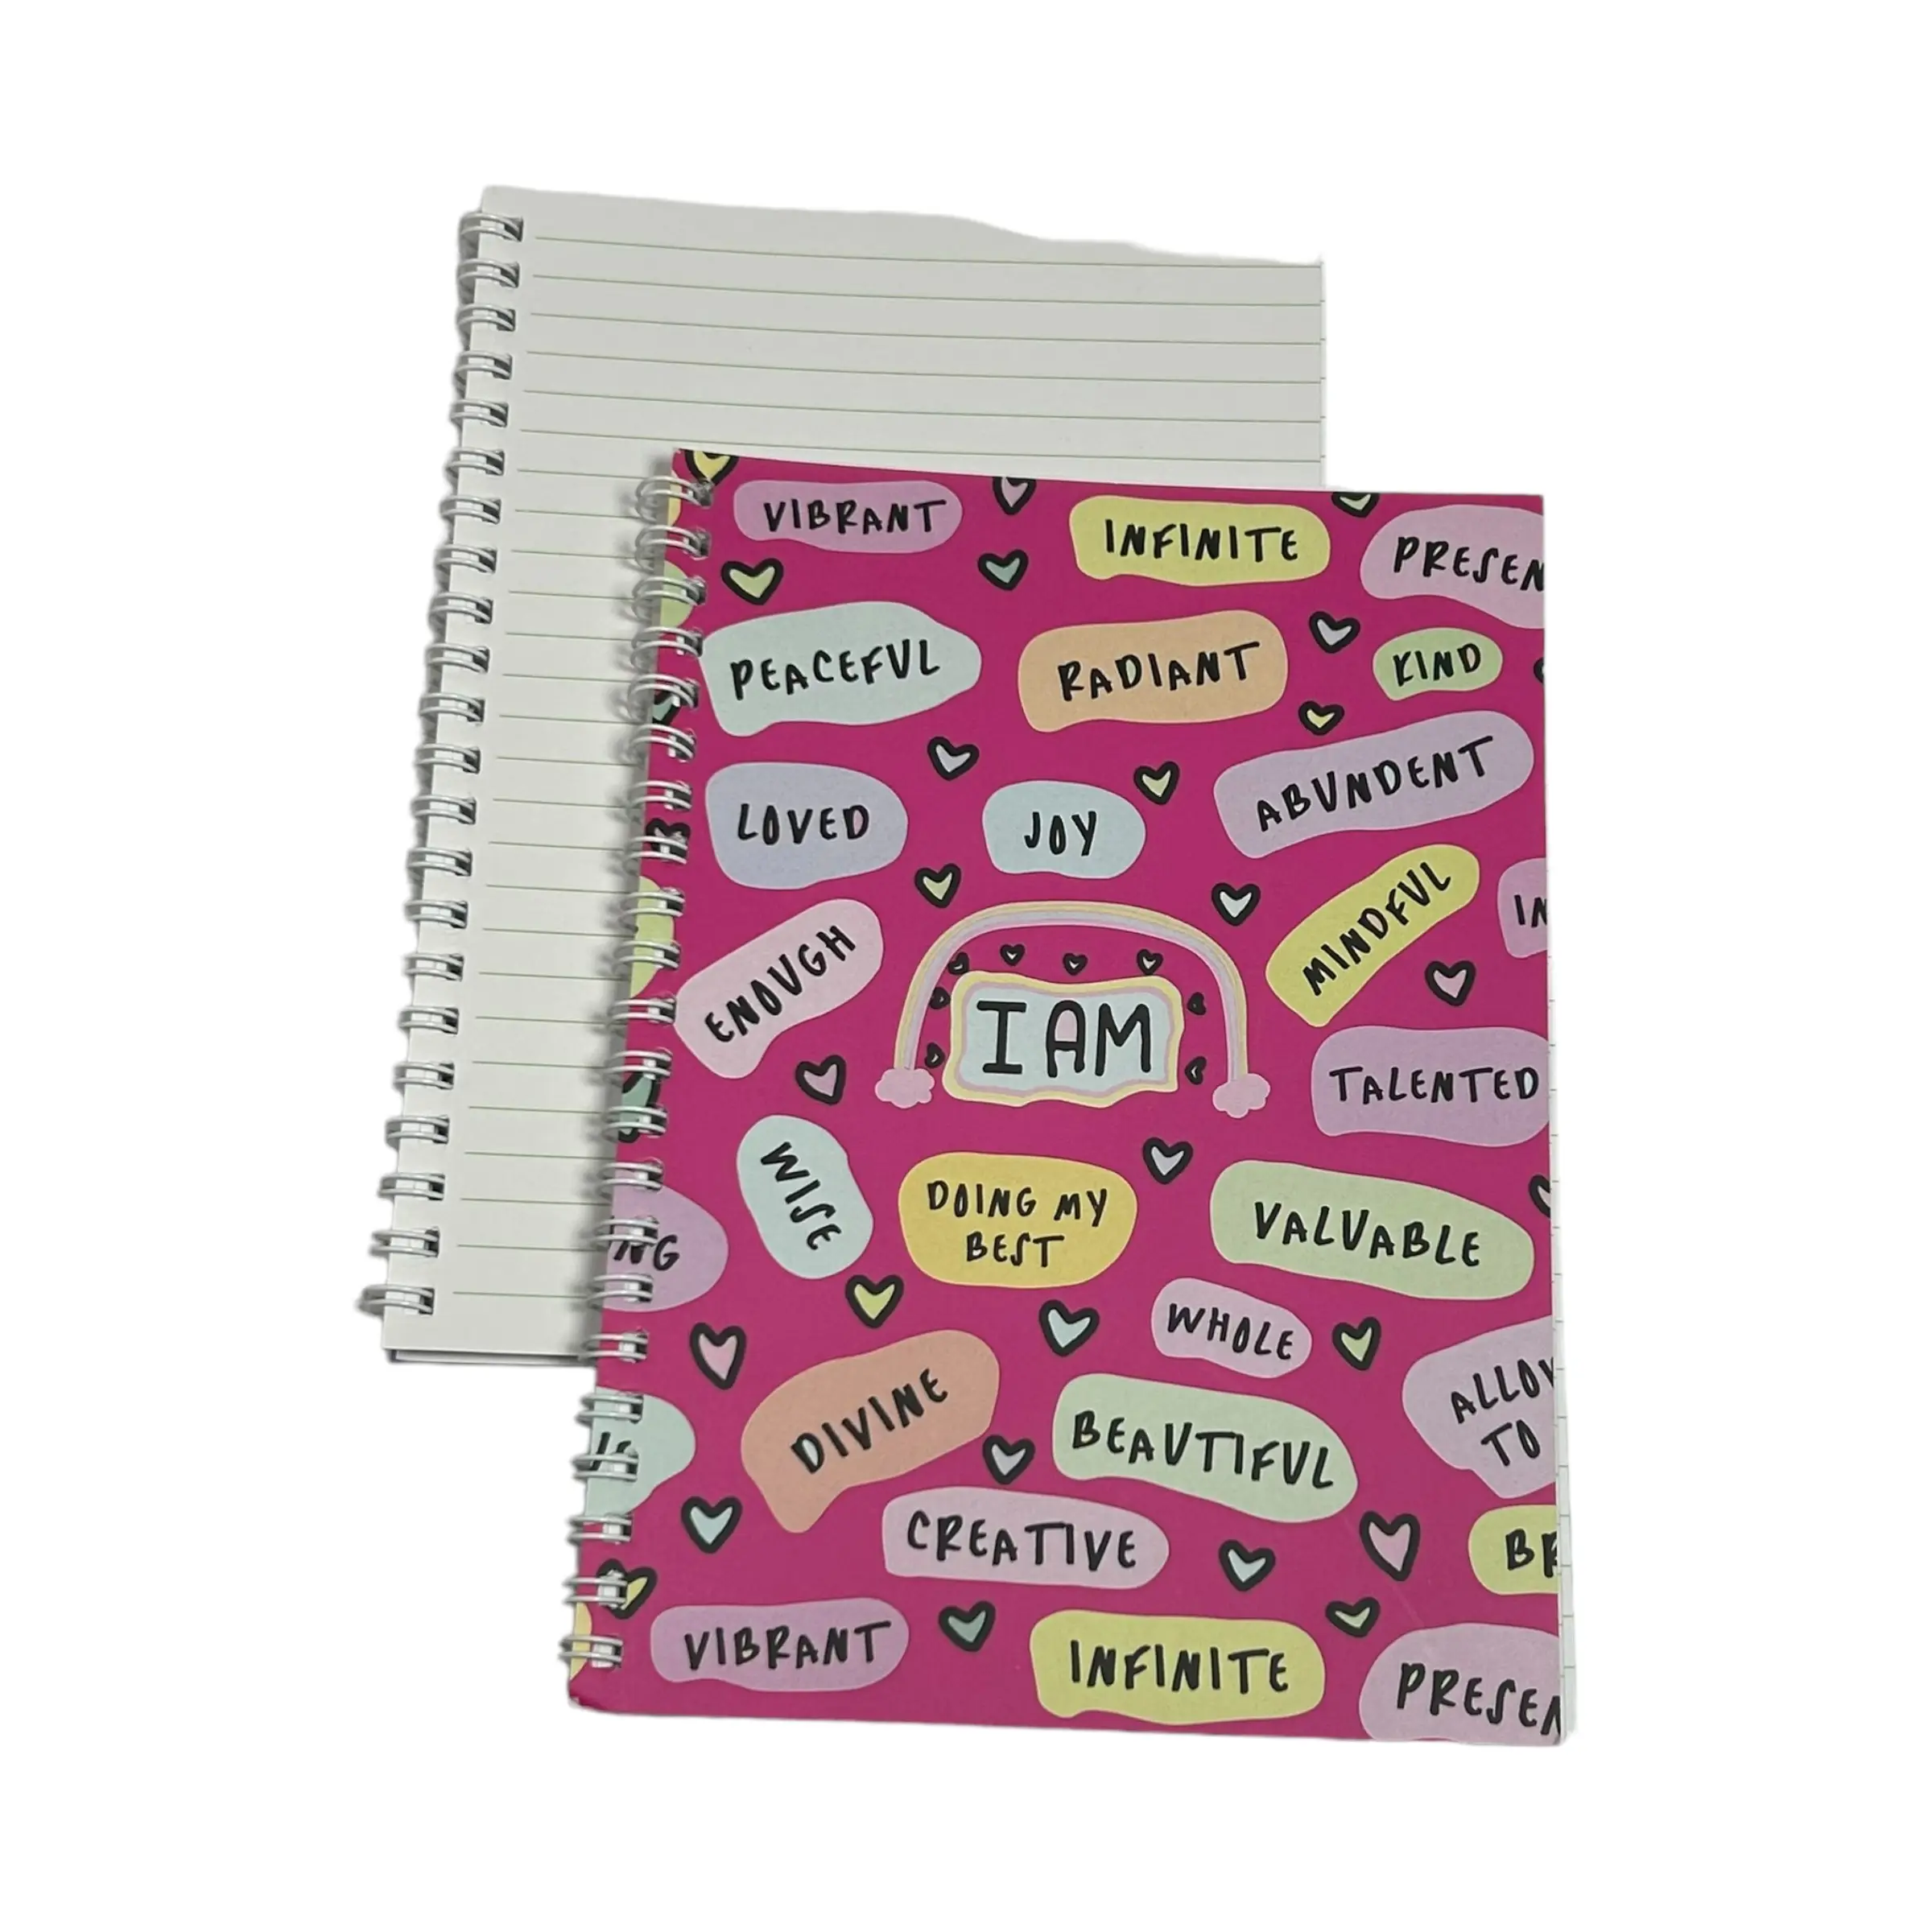 Notebook A5 kutipan komik inspirasional kutipan senyum Yalla desain buku salinan notebook disesuaikan dengan desain yang unik